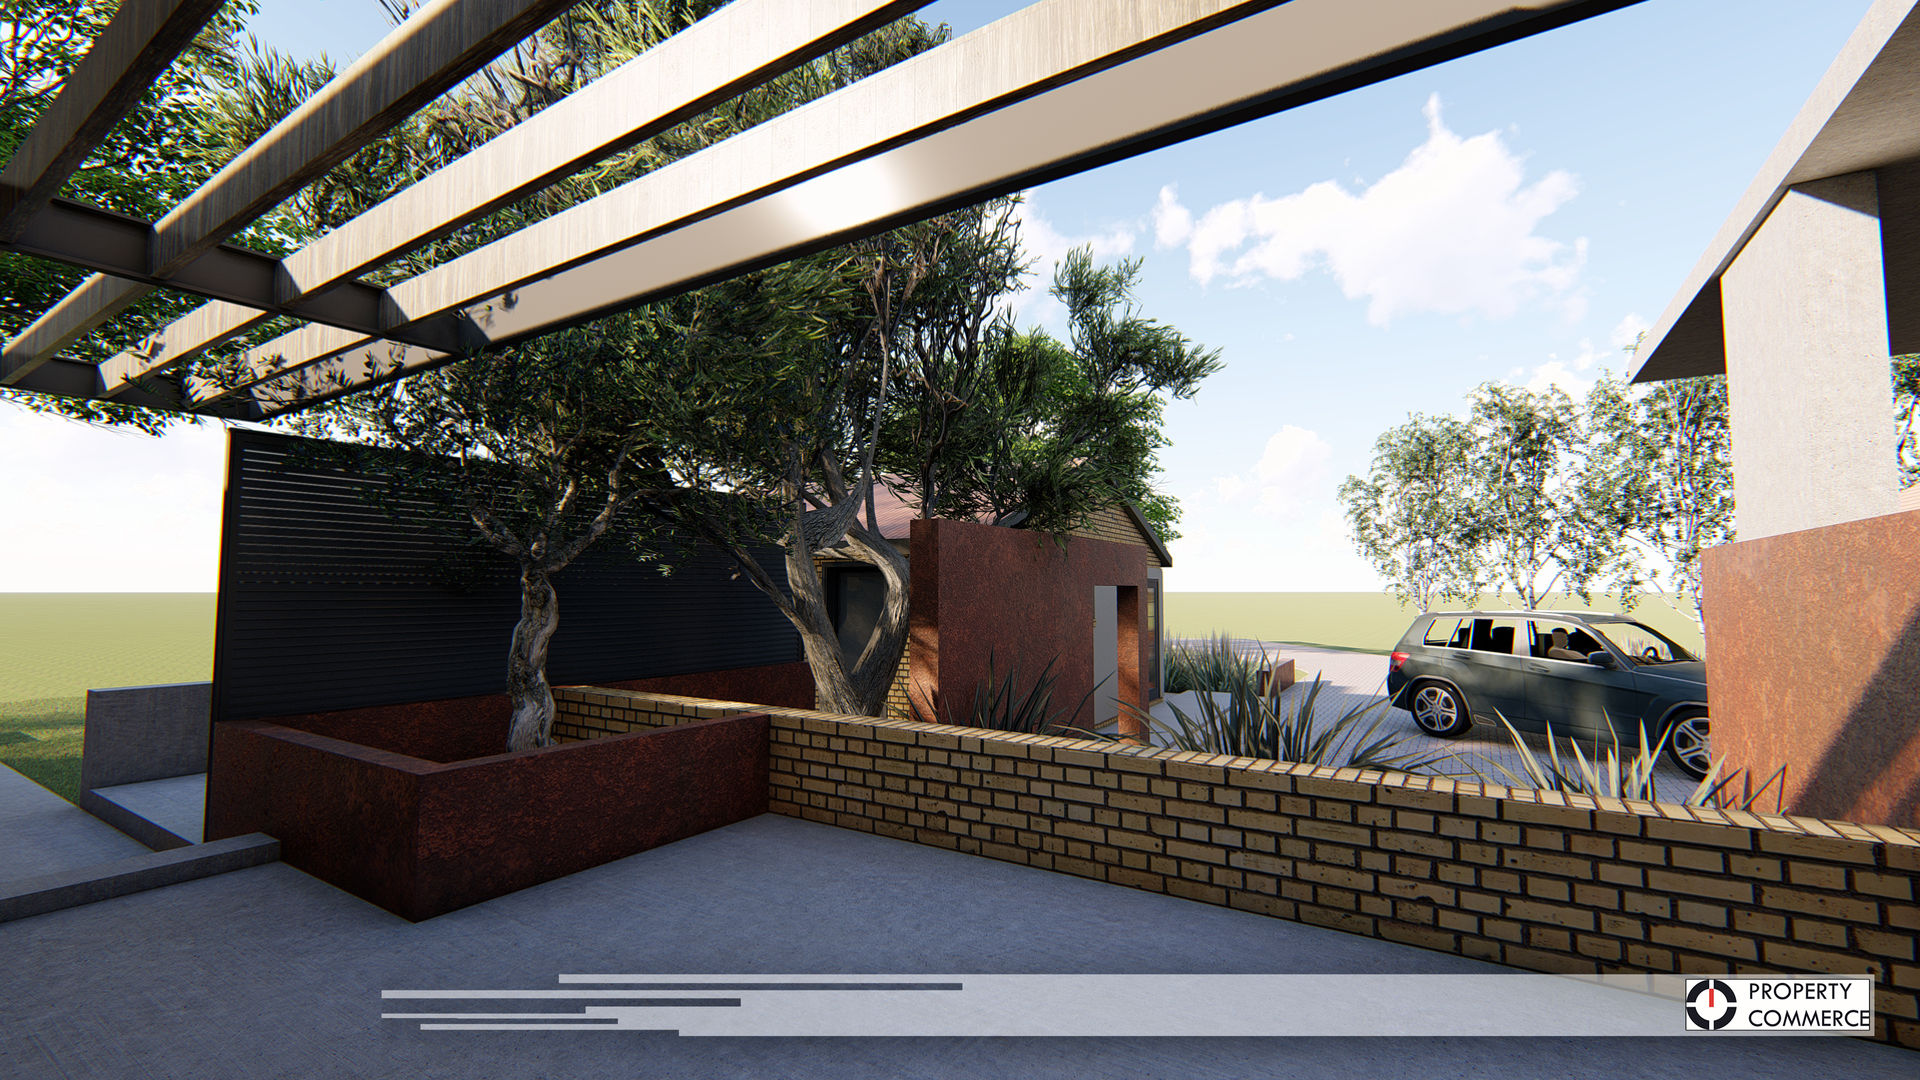 House Du Plessis, Property Commerce Architects Property Commerce Architects Moderne balkons, veranda's en terrassen